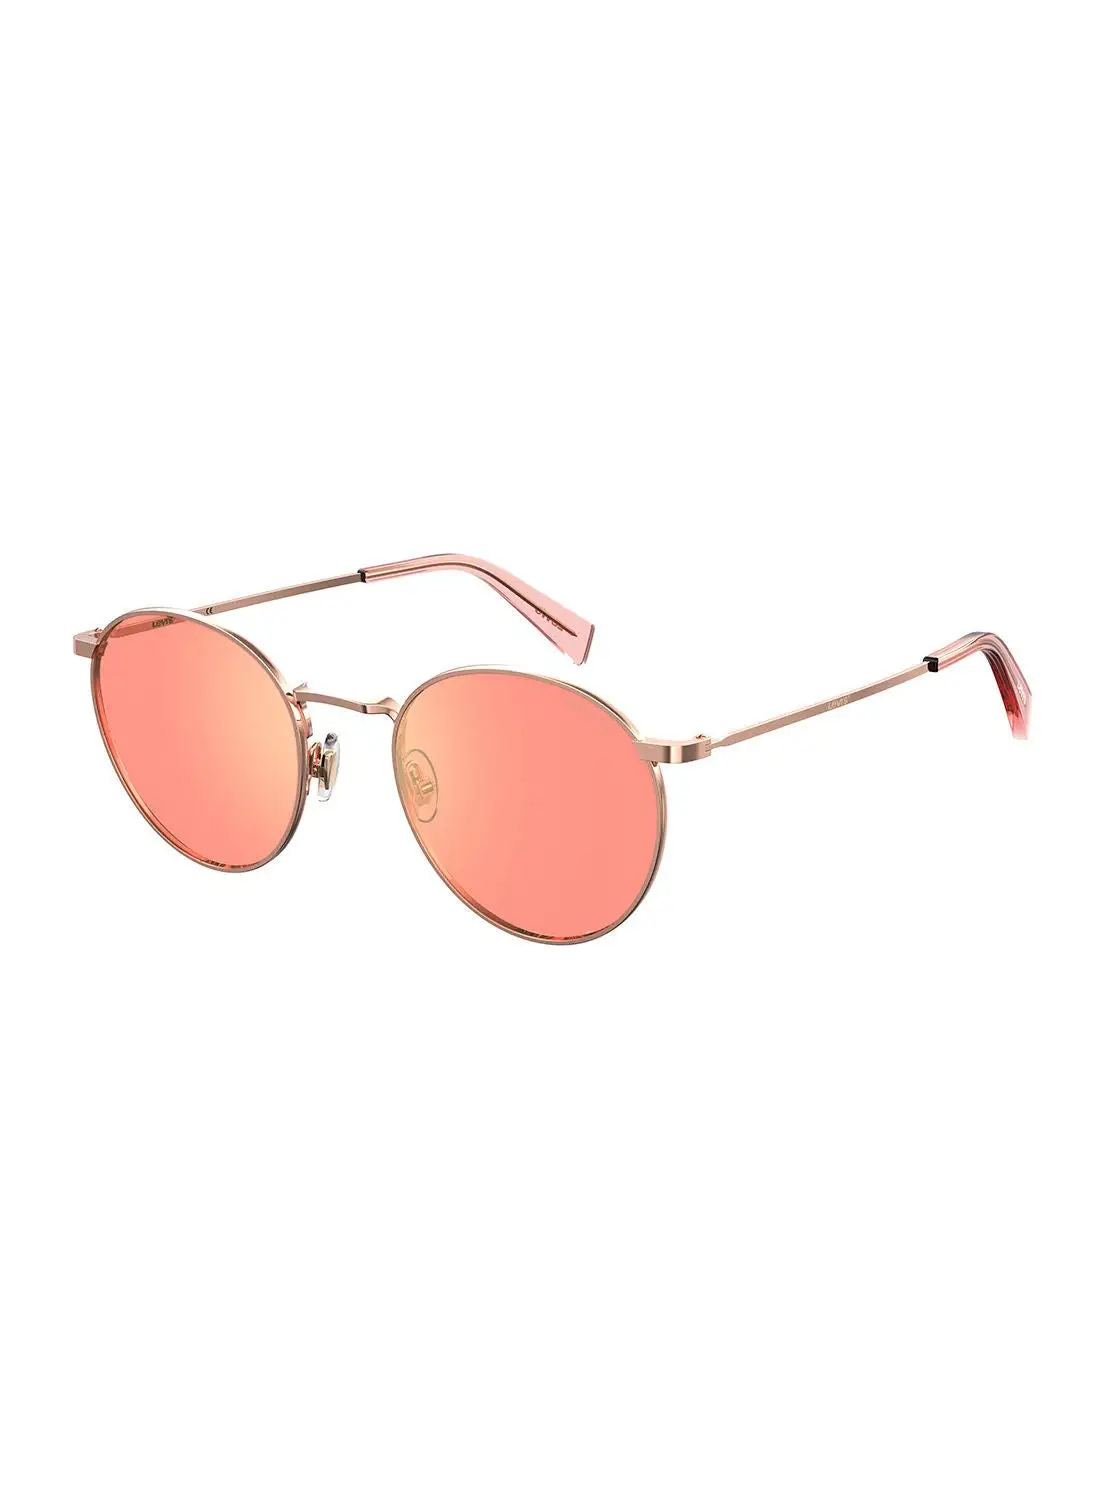 Levi's Unisex UV Protection Round Sunglasses - Lv 1005/S Gold Copp 50 - Lens Size: 50 Mm